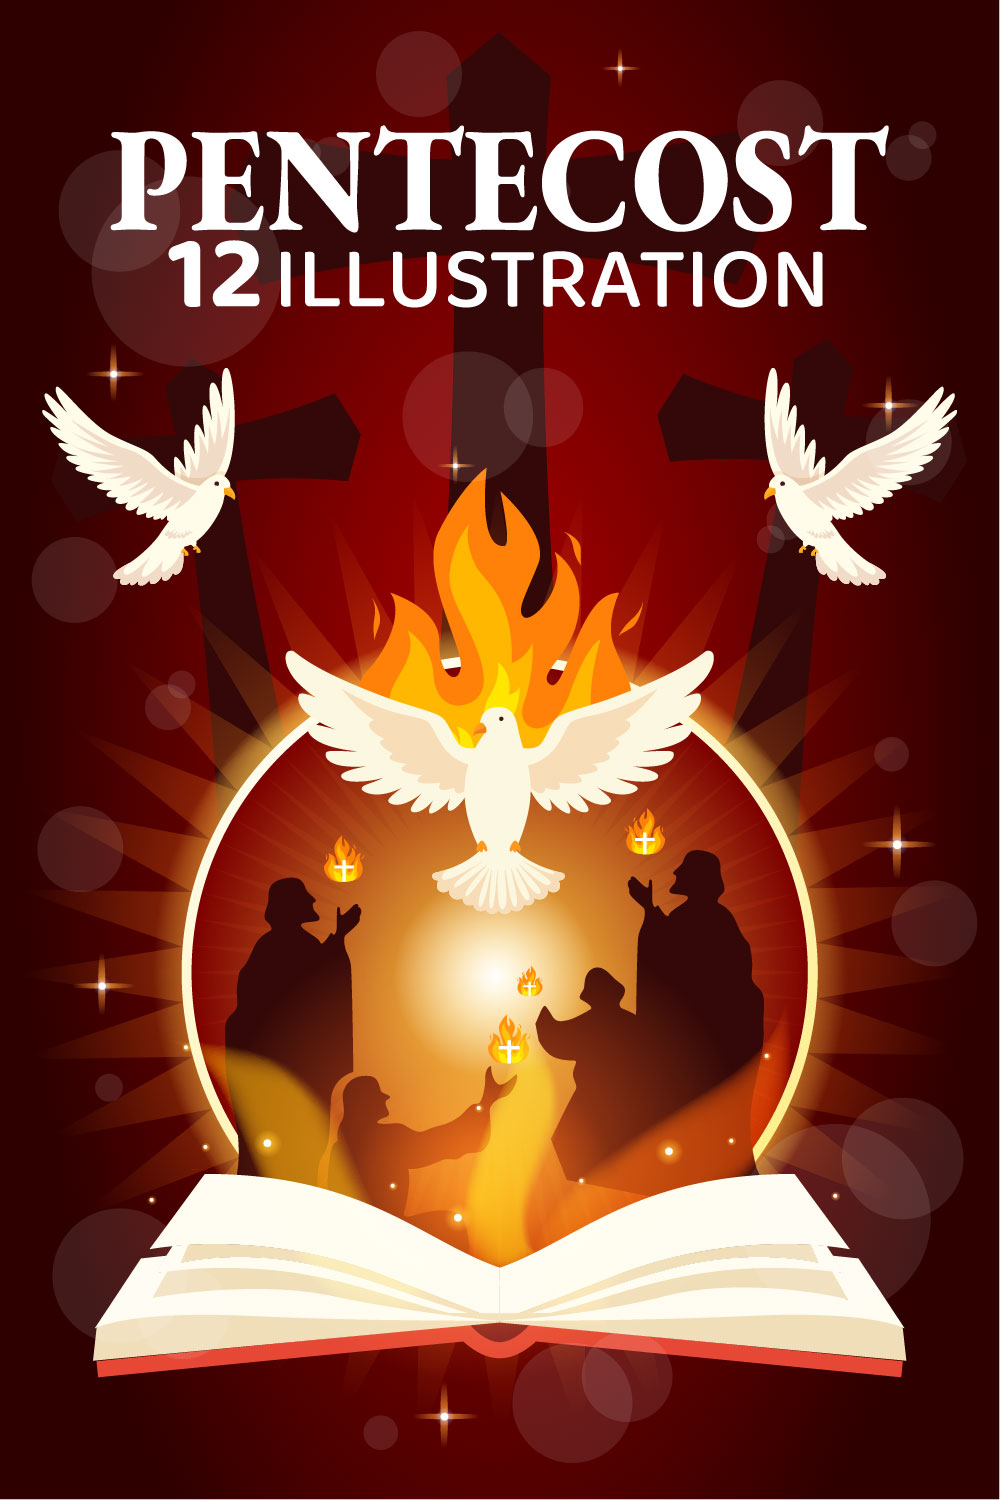 12 Pentecost Illustration pinterest preview image.